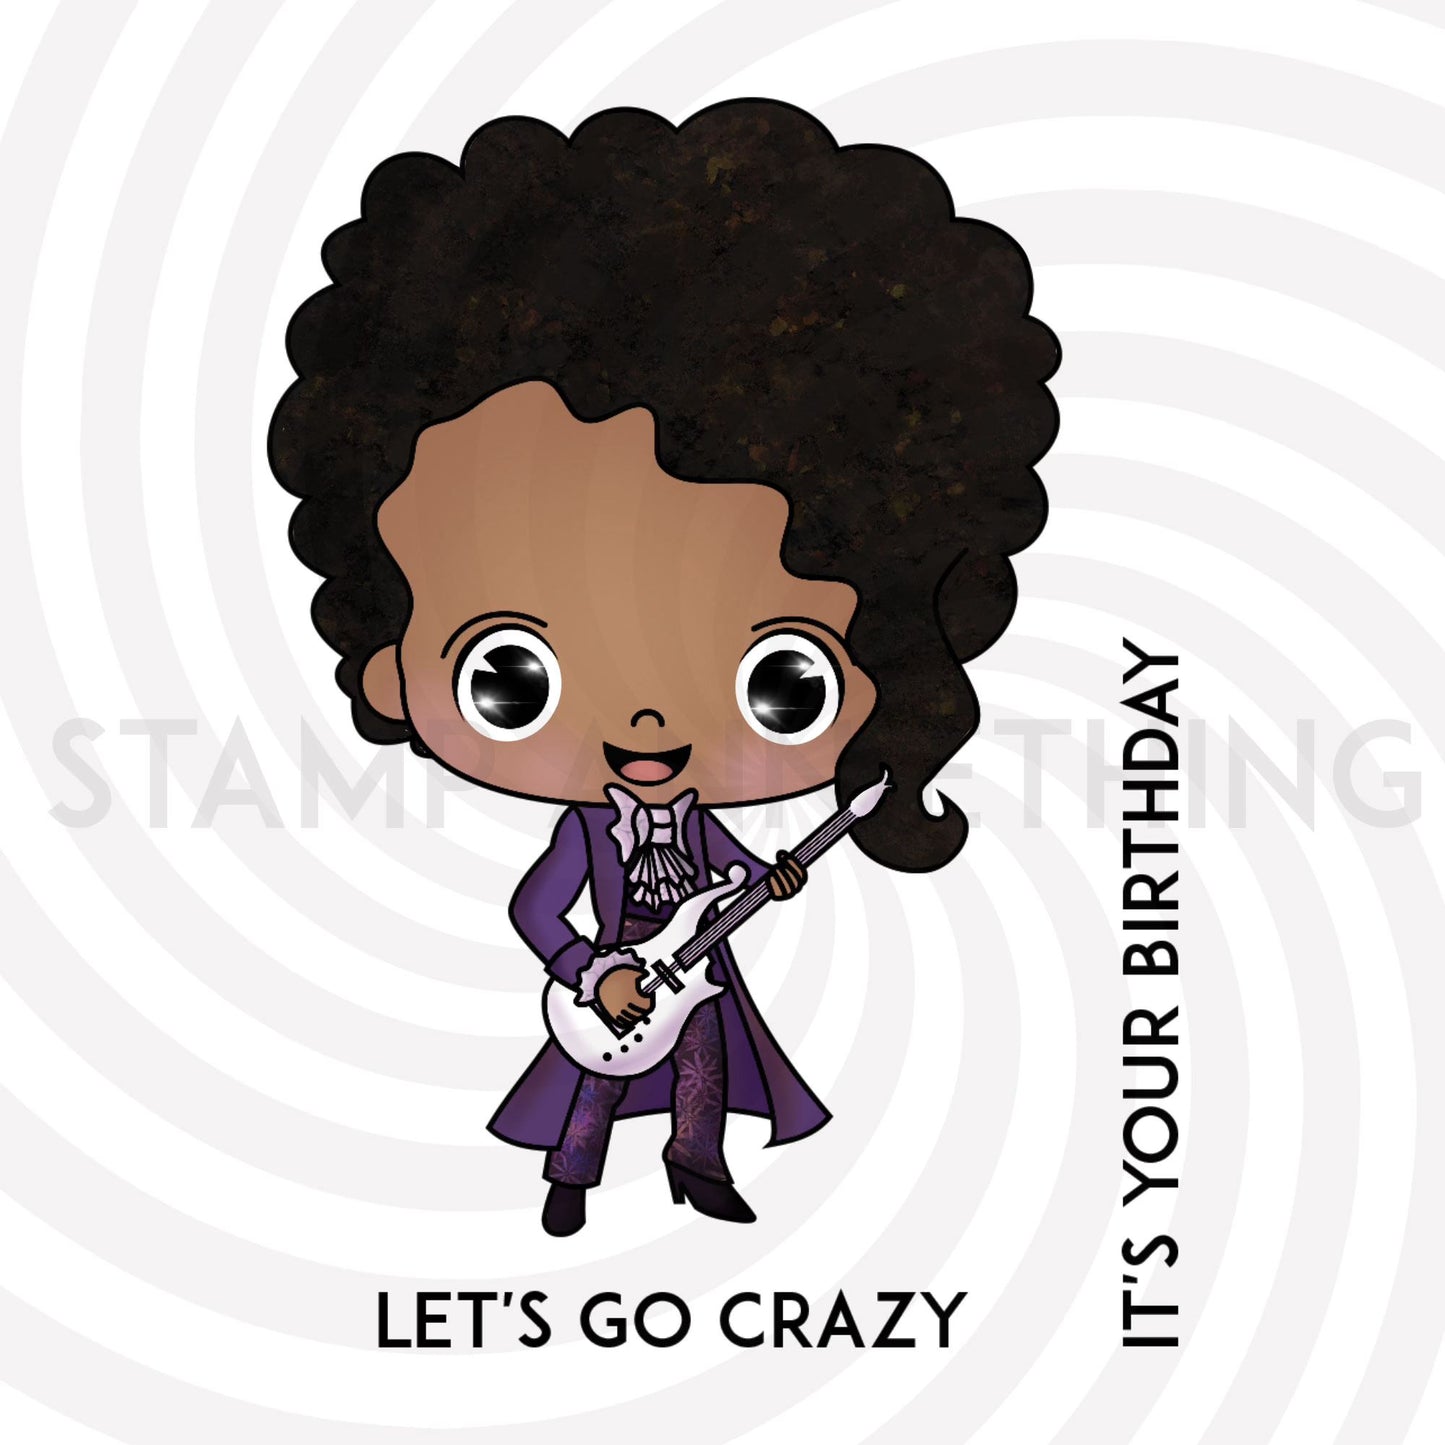 Prince - Let’s Go Crazy